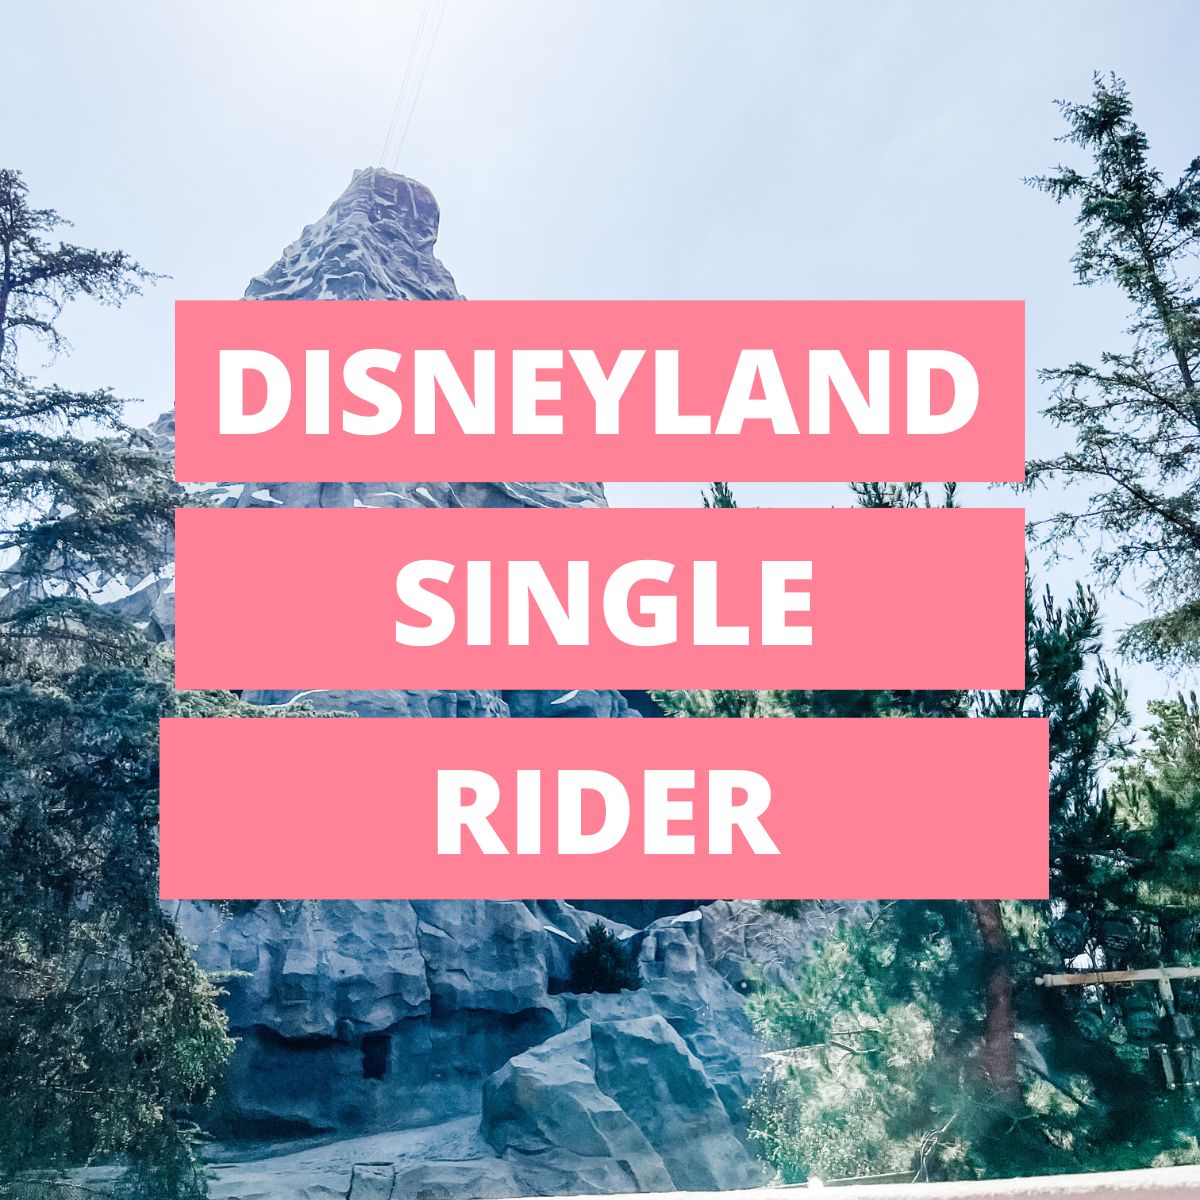 single rider rides at disneyland featured image